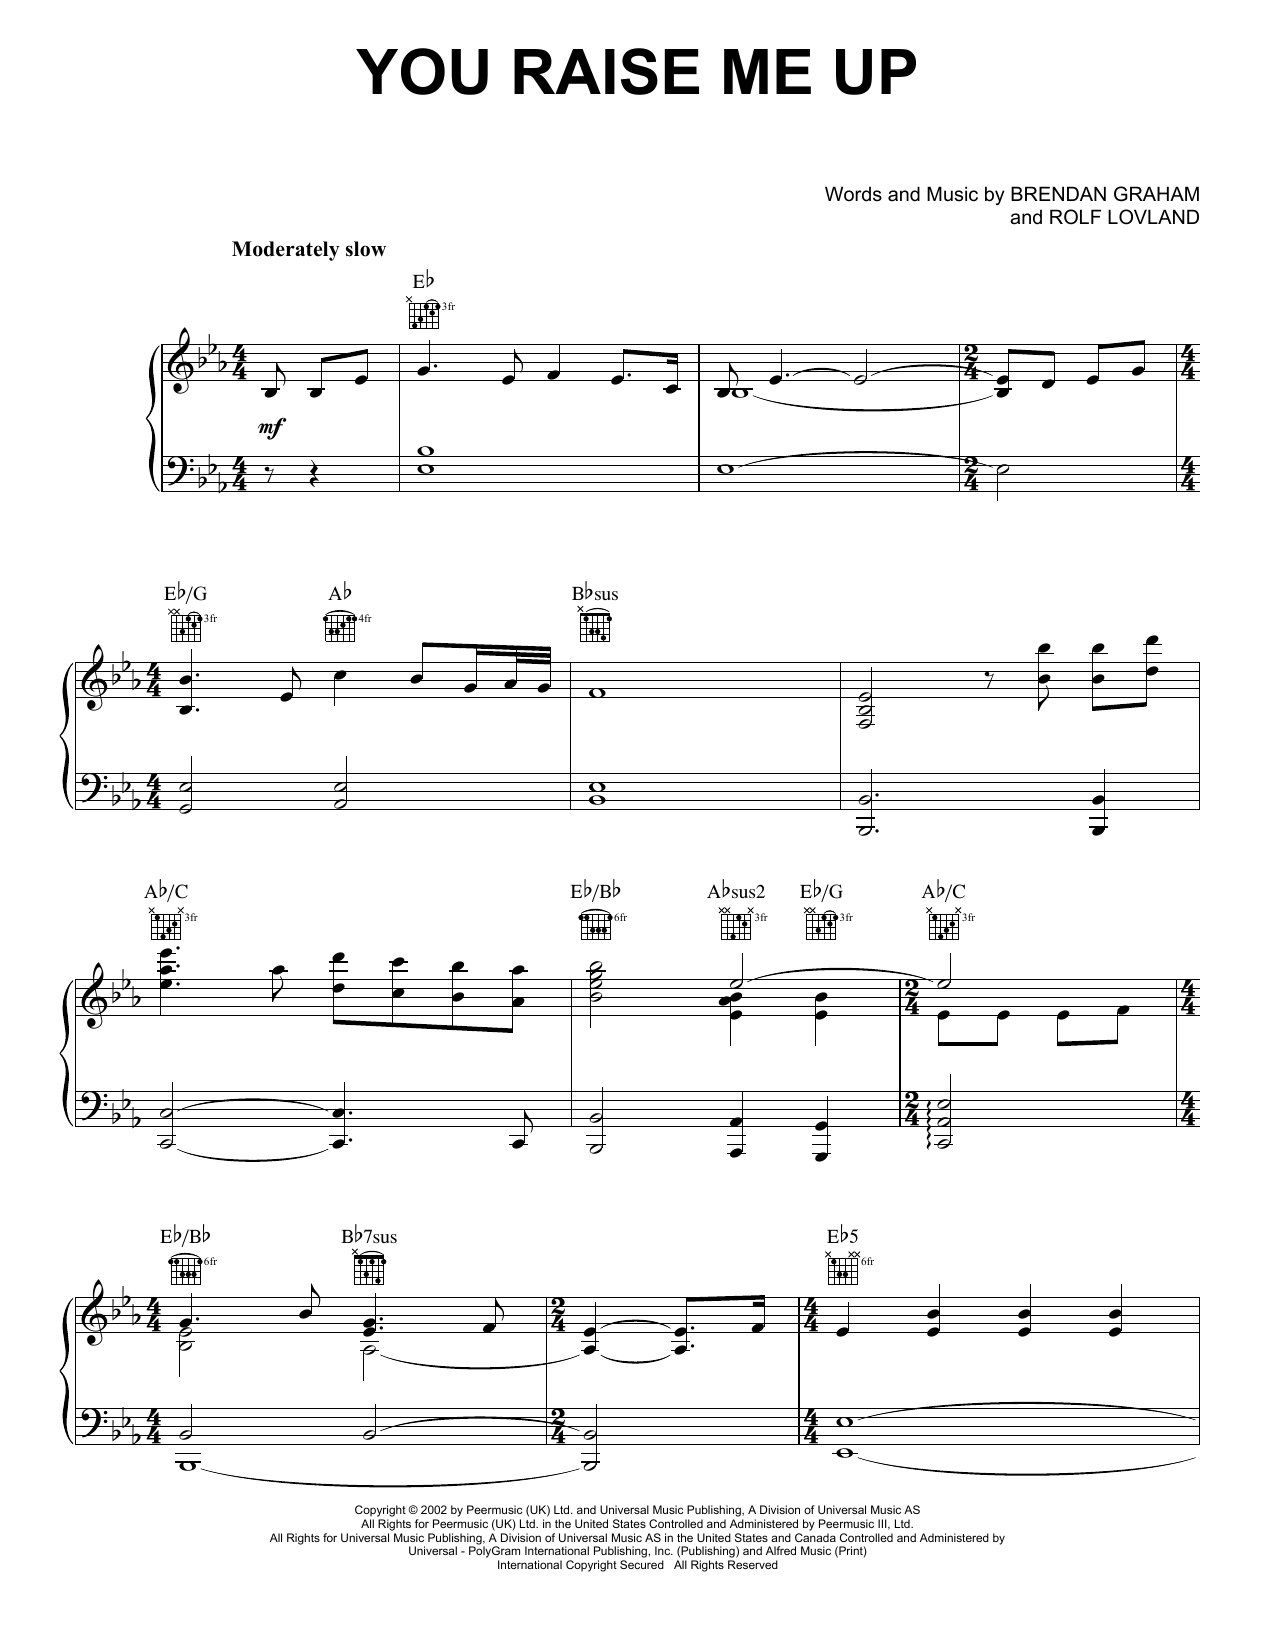 Josh Groban You Raise Me Up Sheet Music Notes & Chords for Guitar Tab - Download or Print PDF